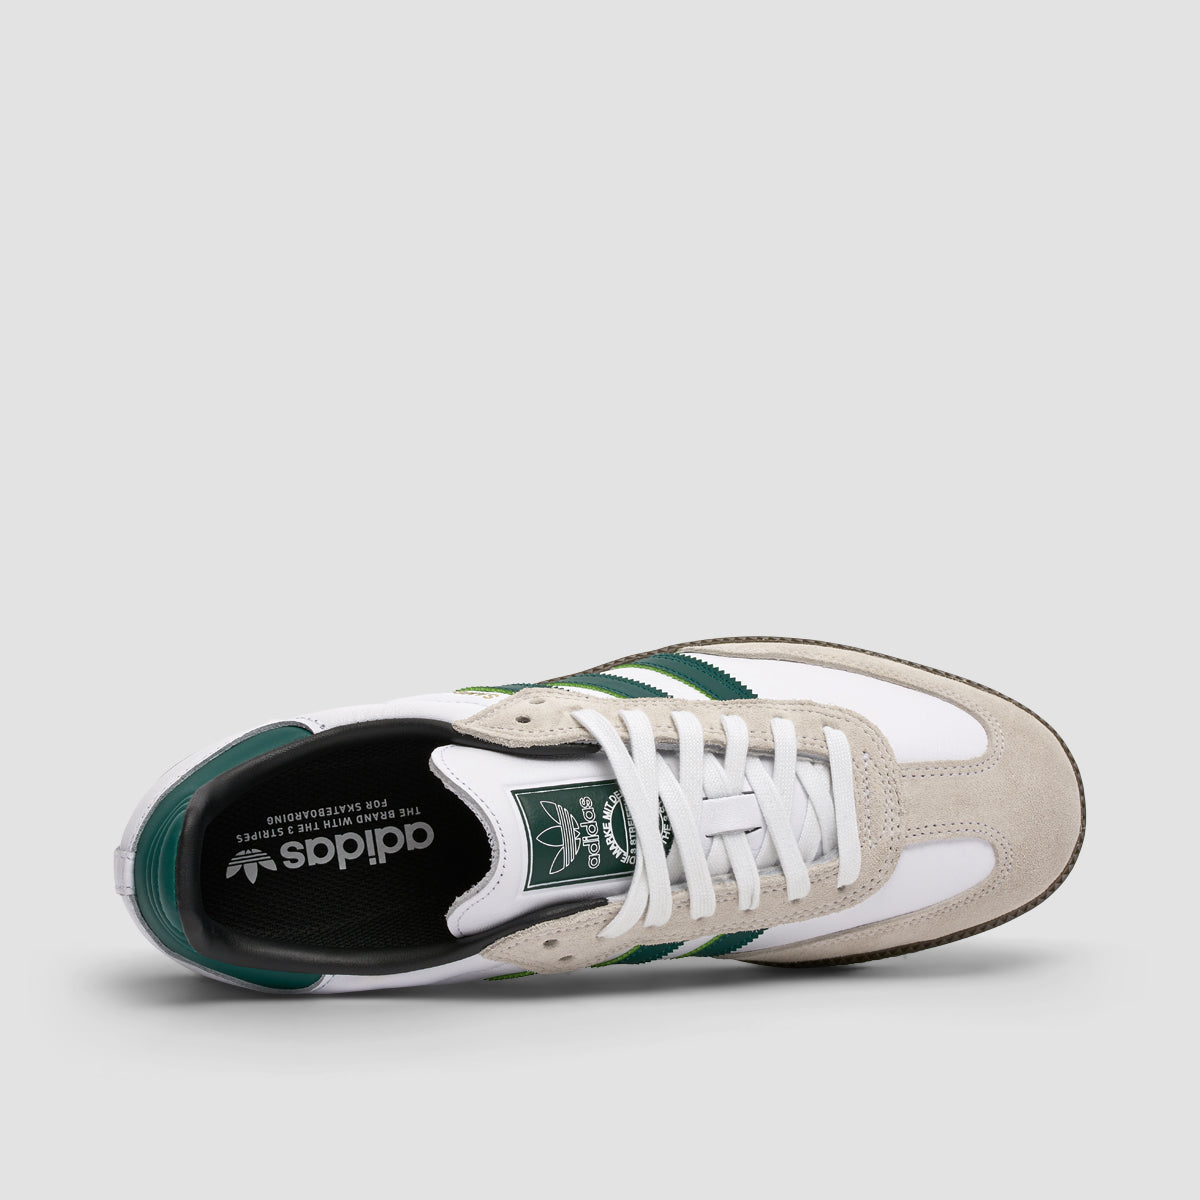 adidas Samba ADV Footwear White/Collegiate Green/Footwear White